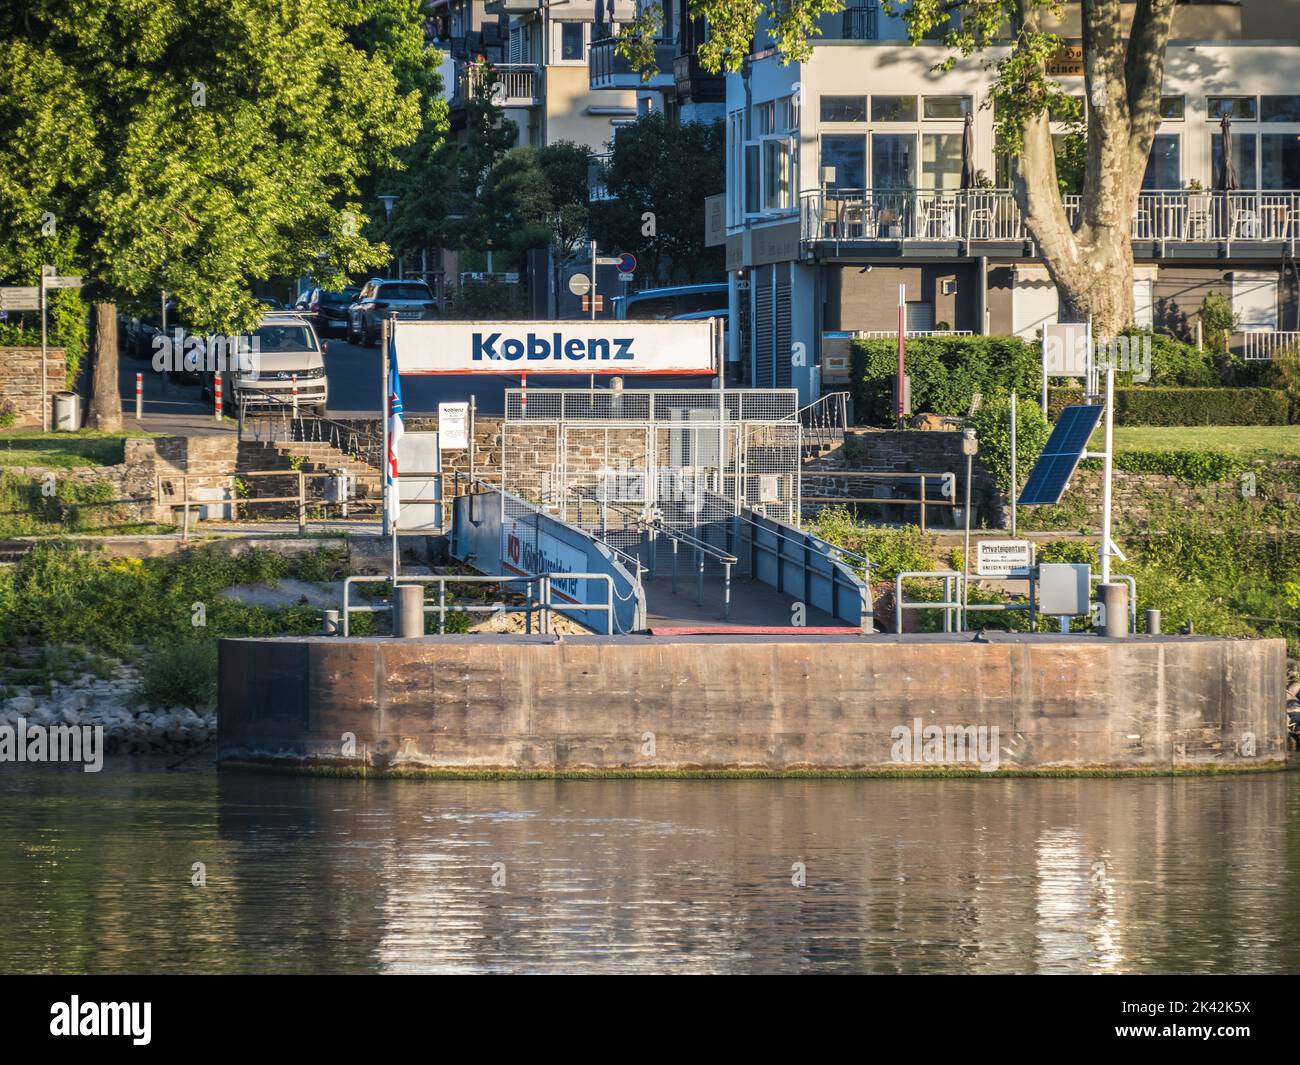 Koln - Dusseldorfer landing site, Koblenz, Germany Stock Photo